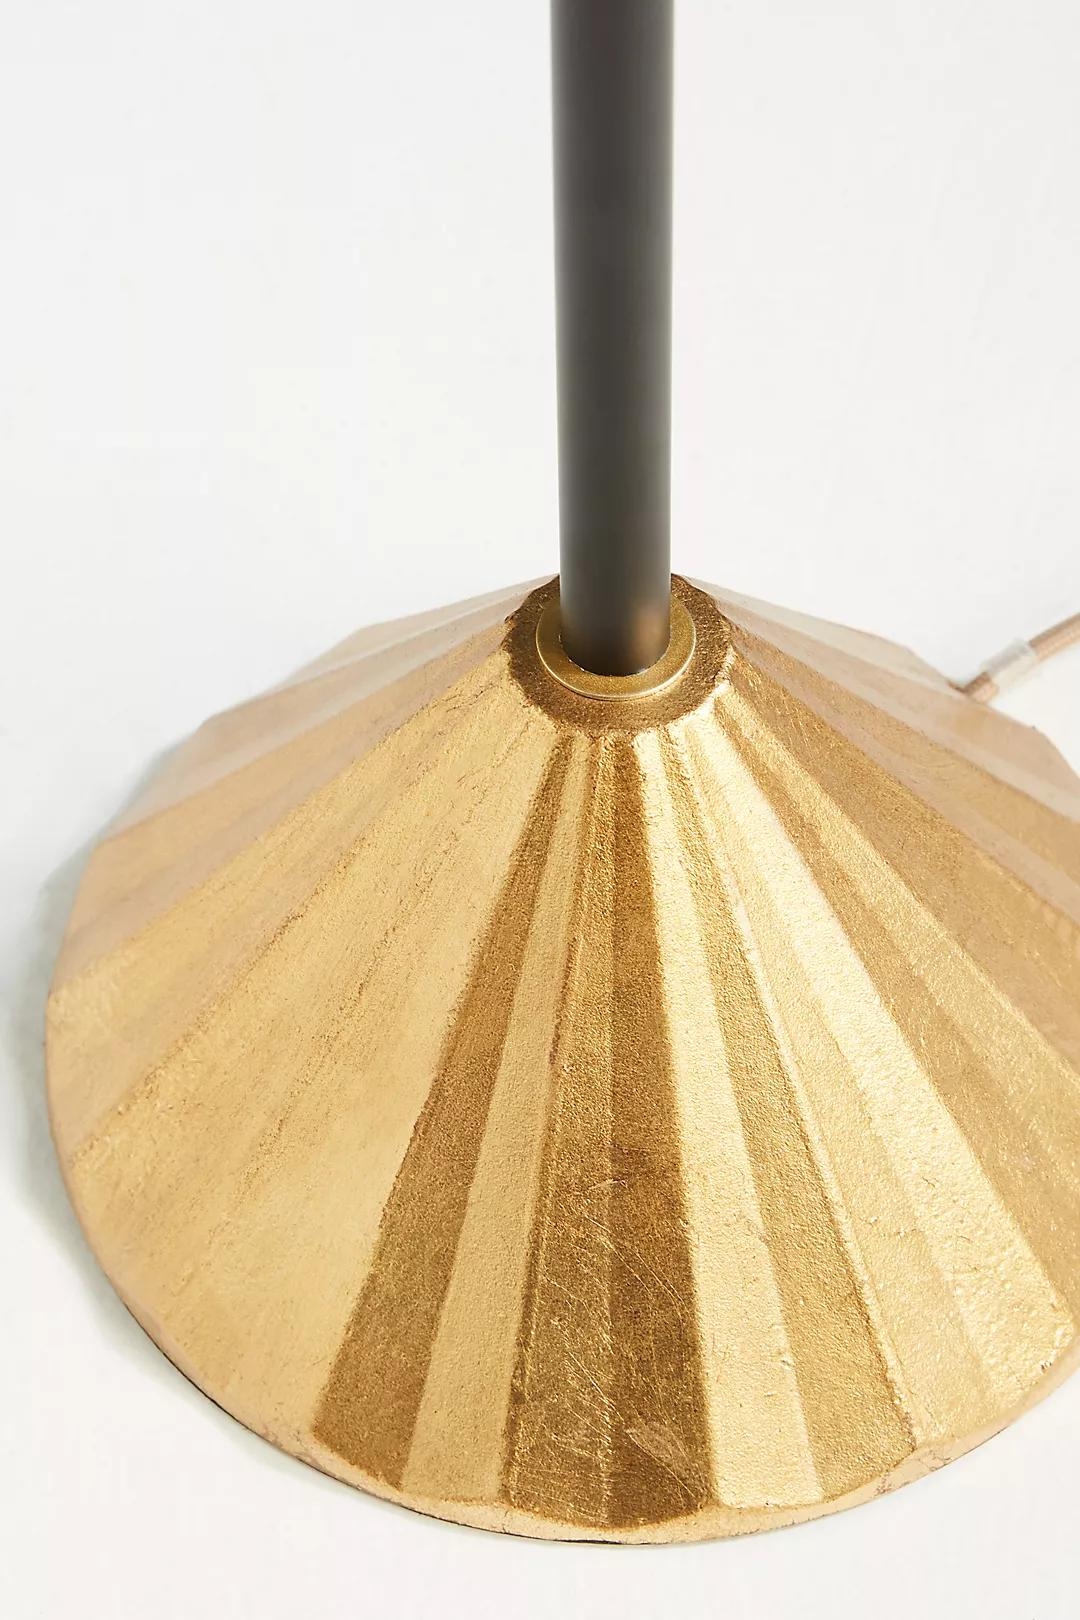 Coastal Living Parasol Floor Lamp - Image 3